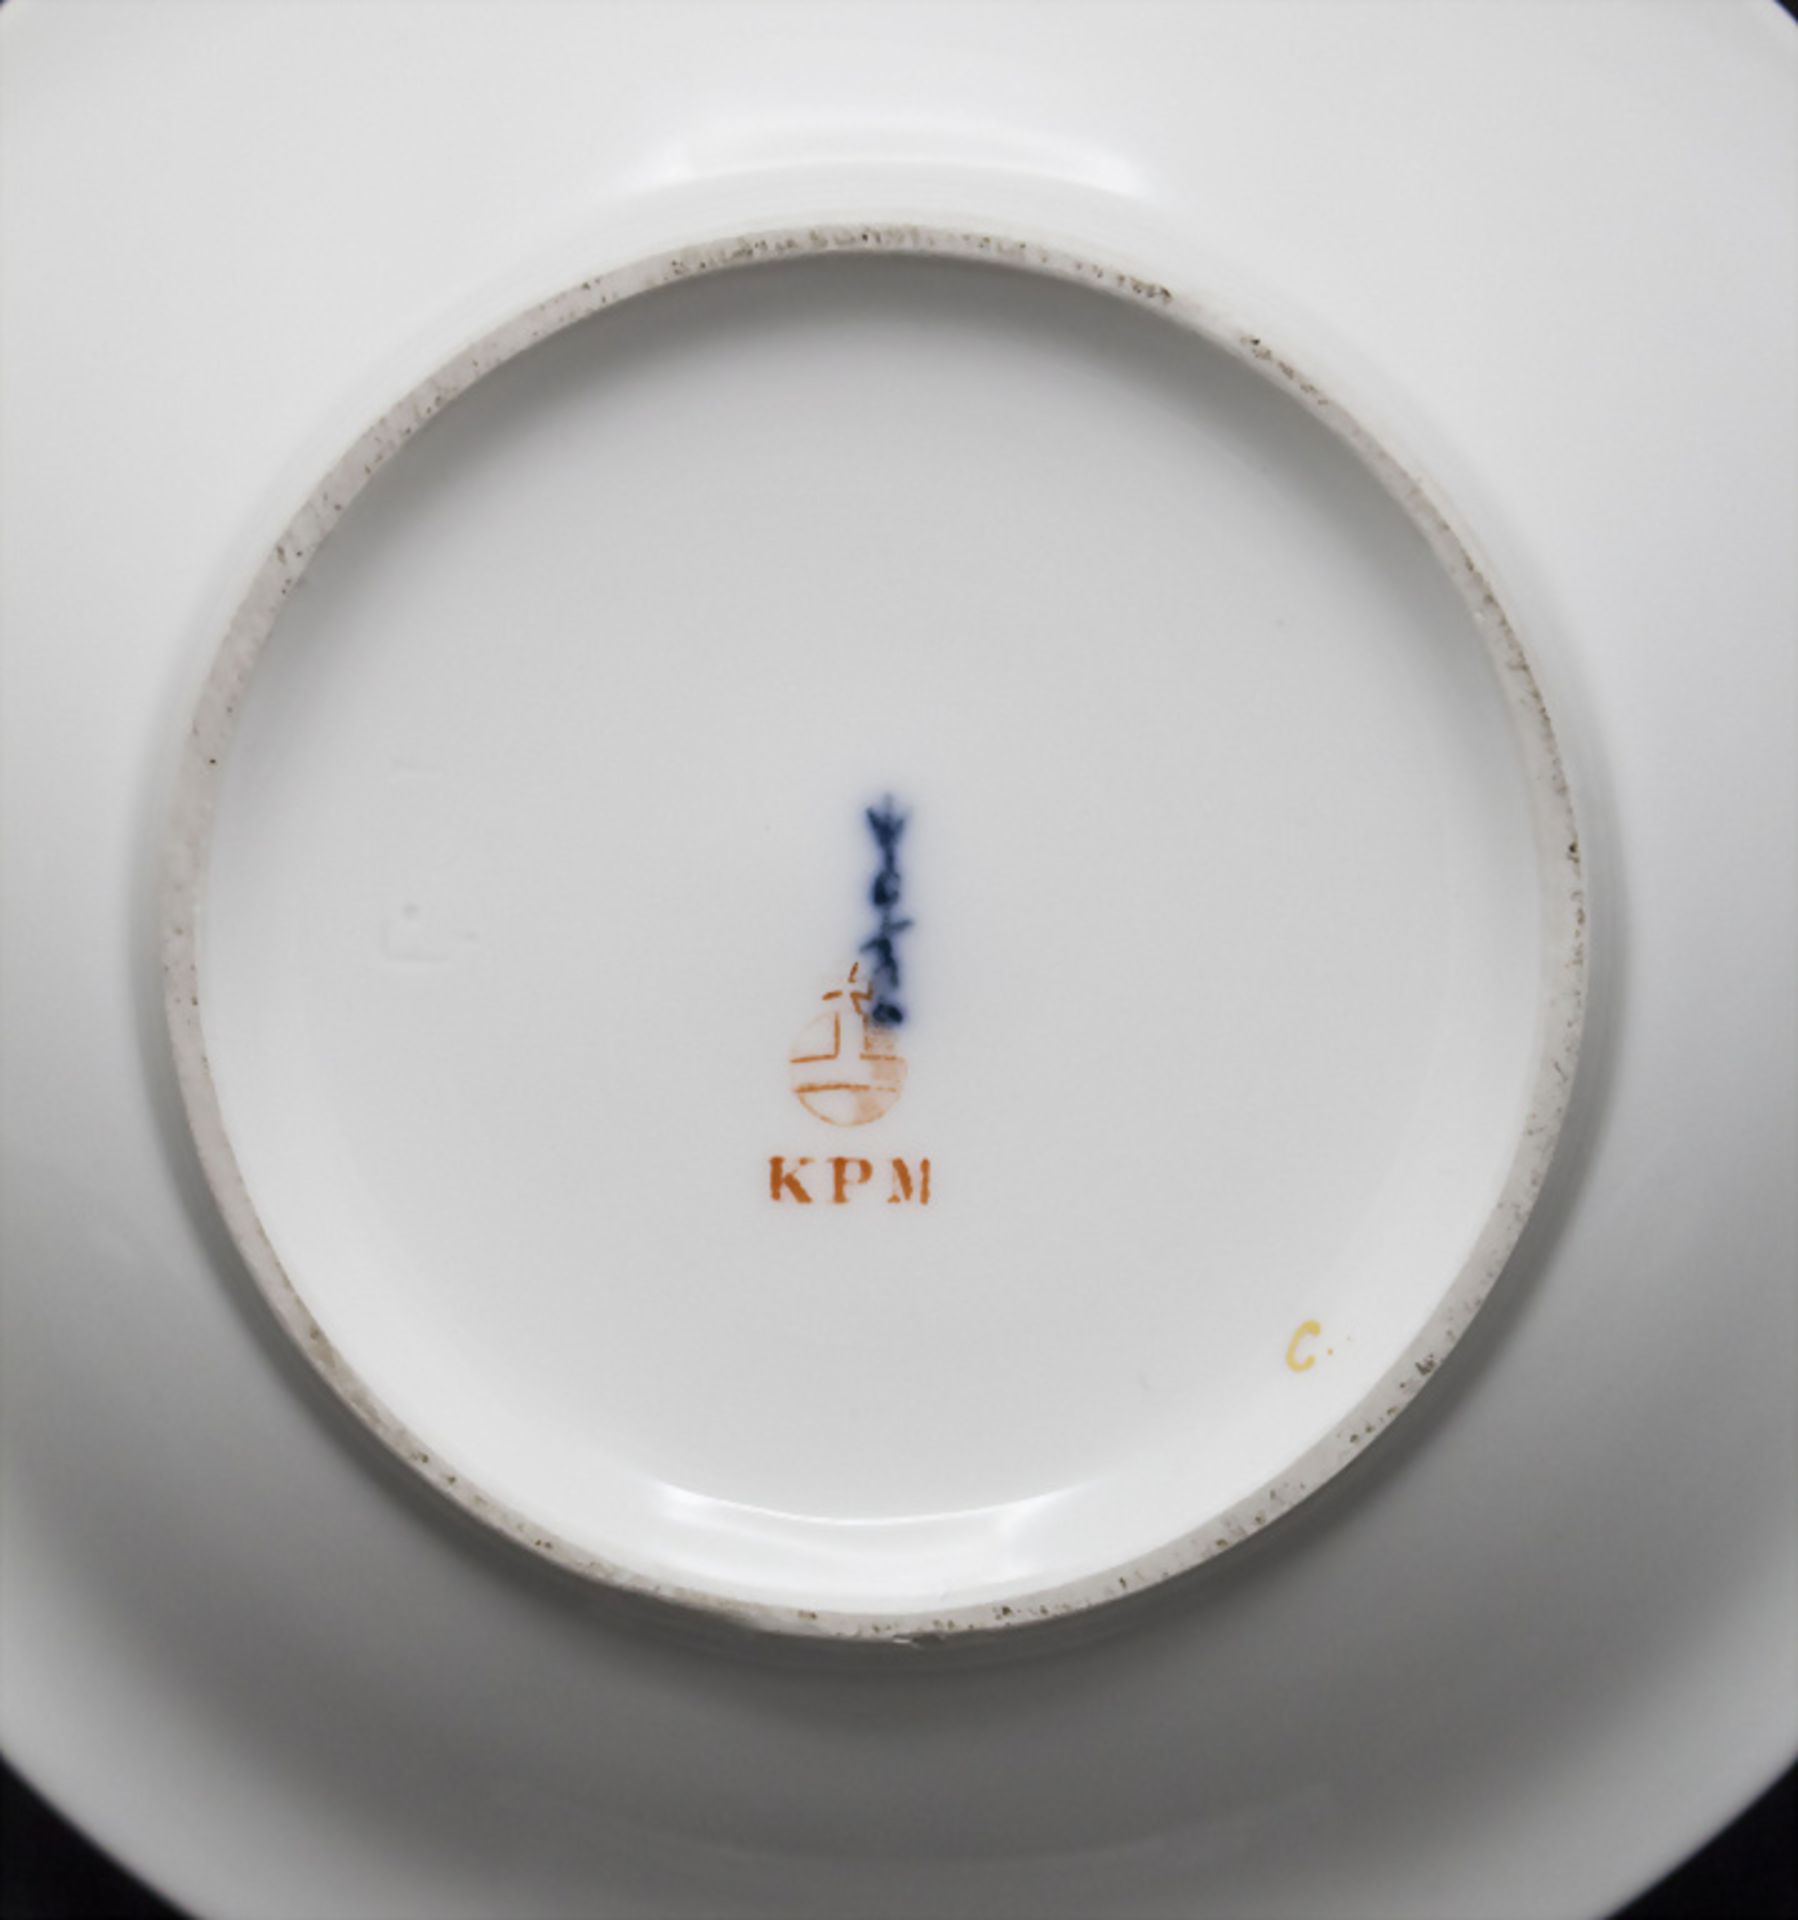 2 Tassen mit Untertassen / Two cups and saucers, KPM Berlin, 19. Jh. - Image 9 of 9